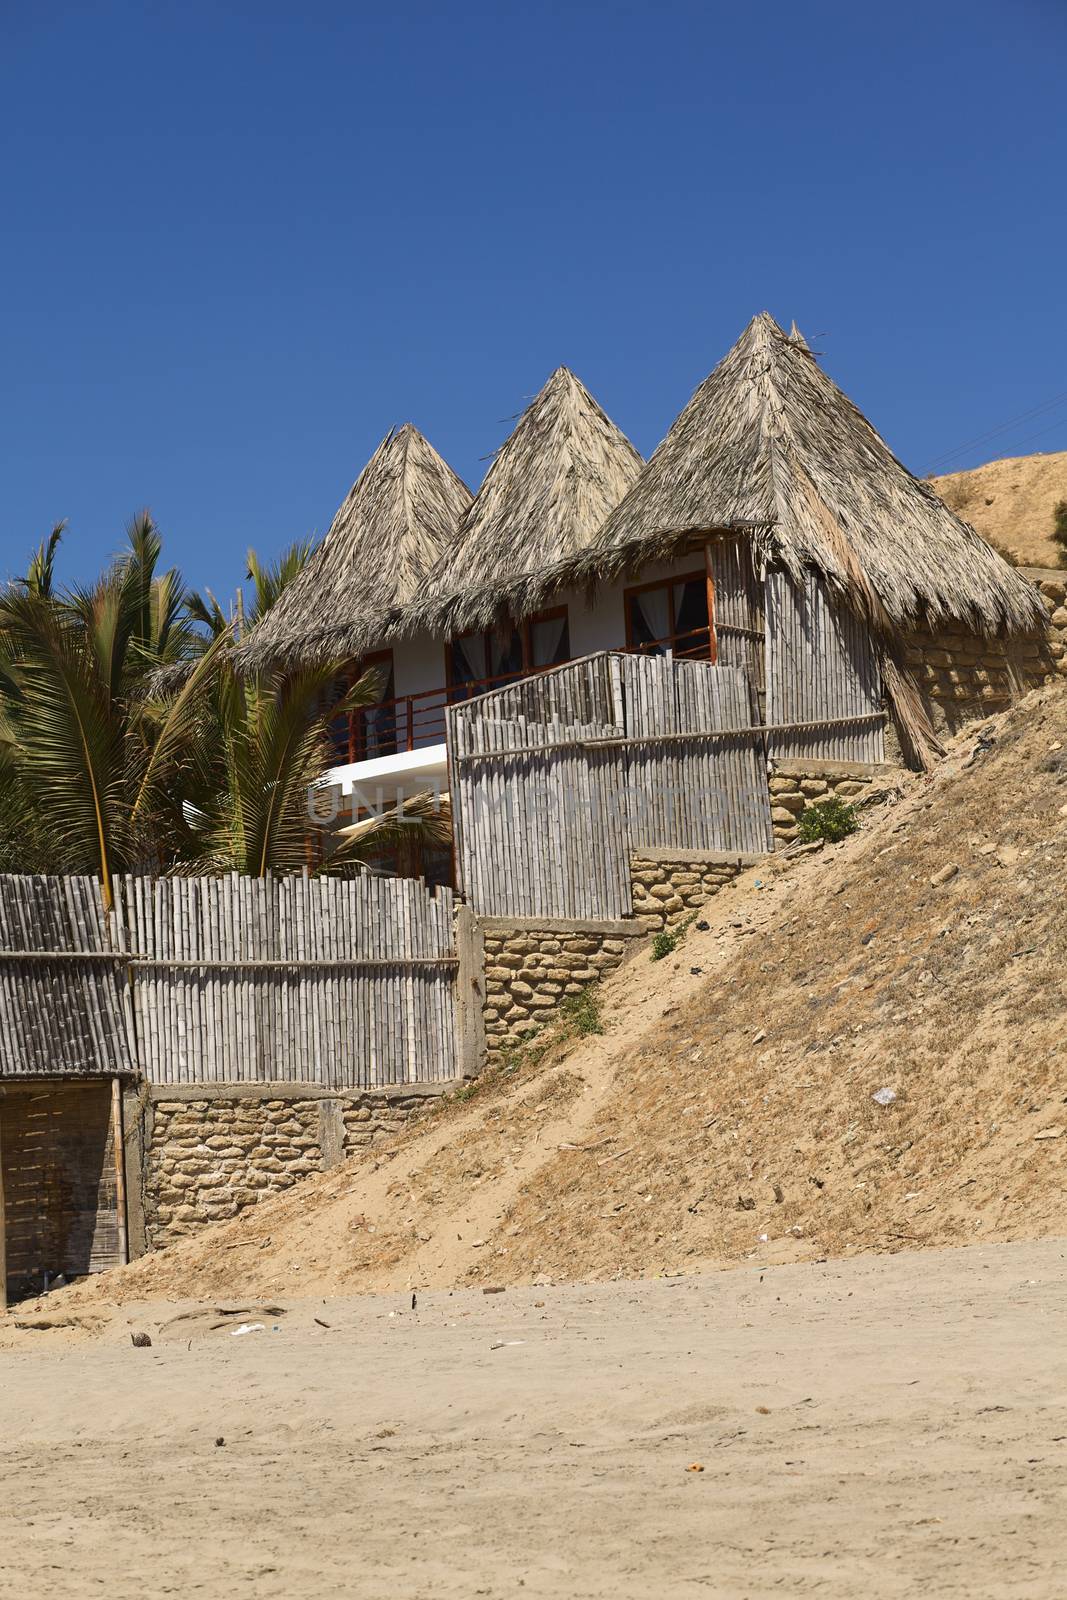 Accommodation in Mancora, Peru by sven